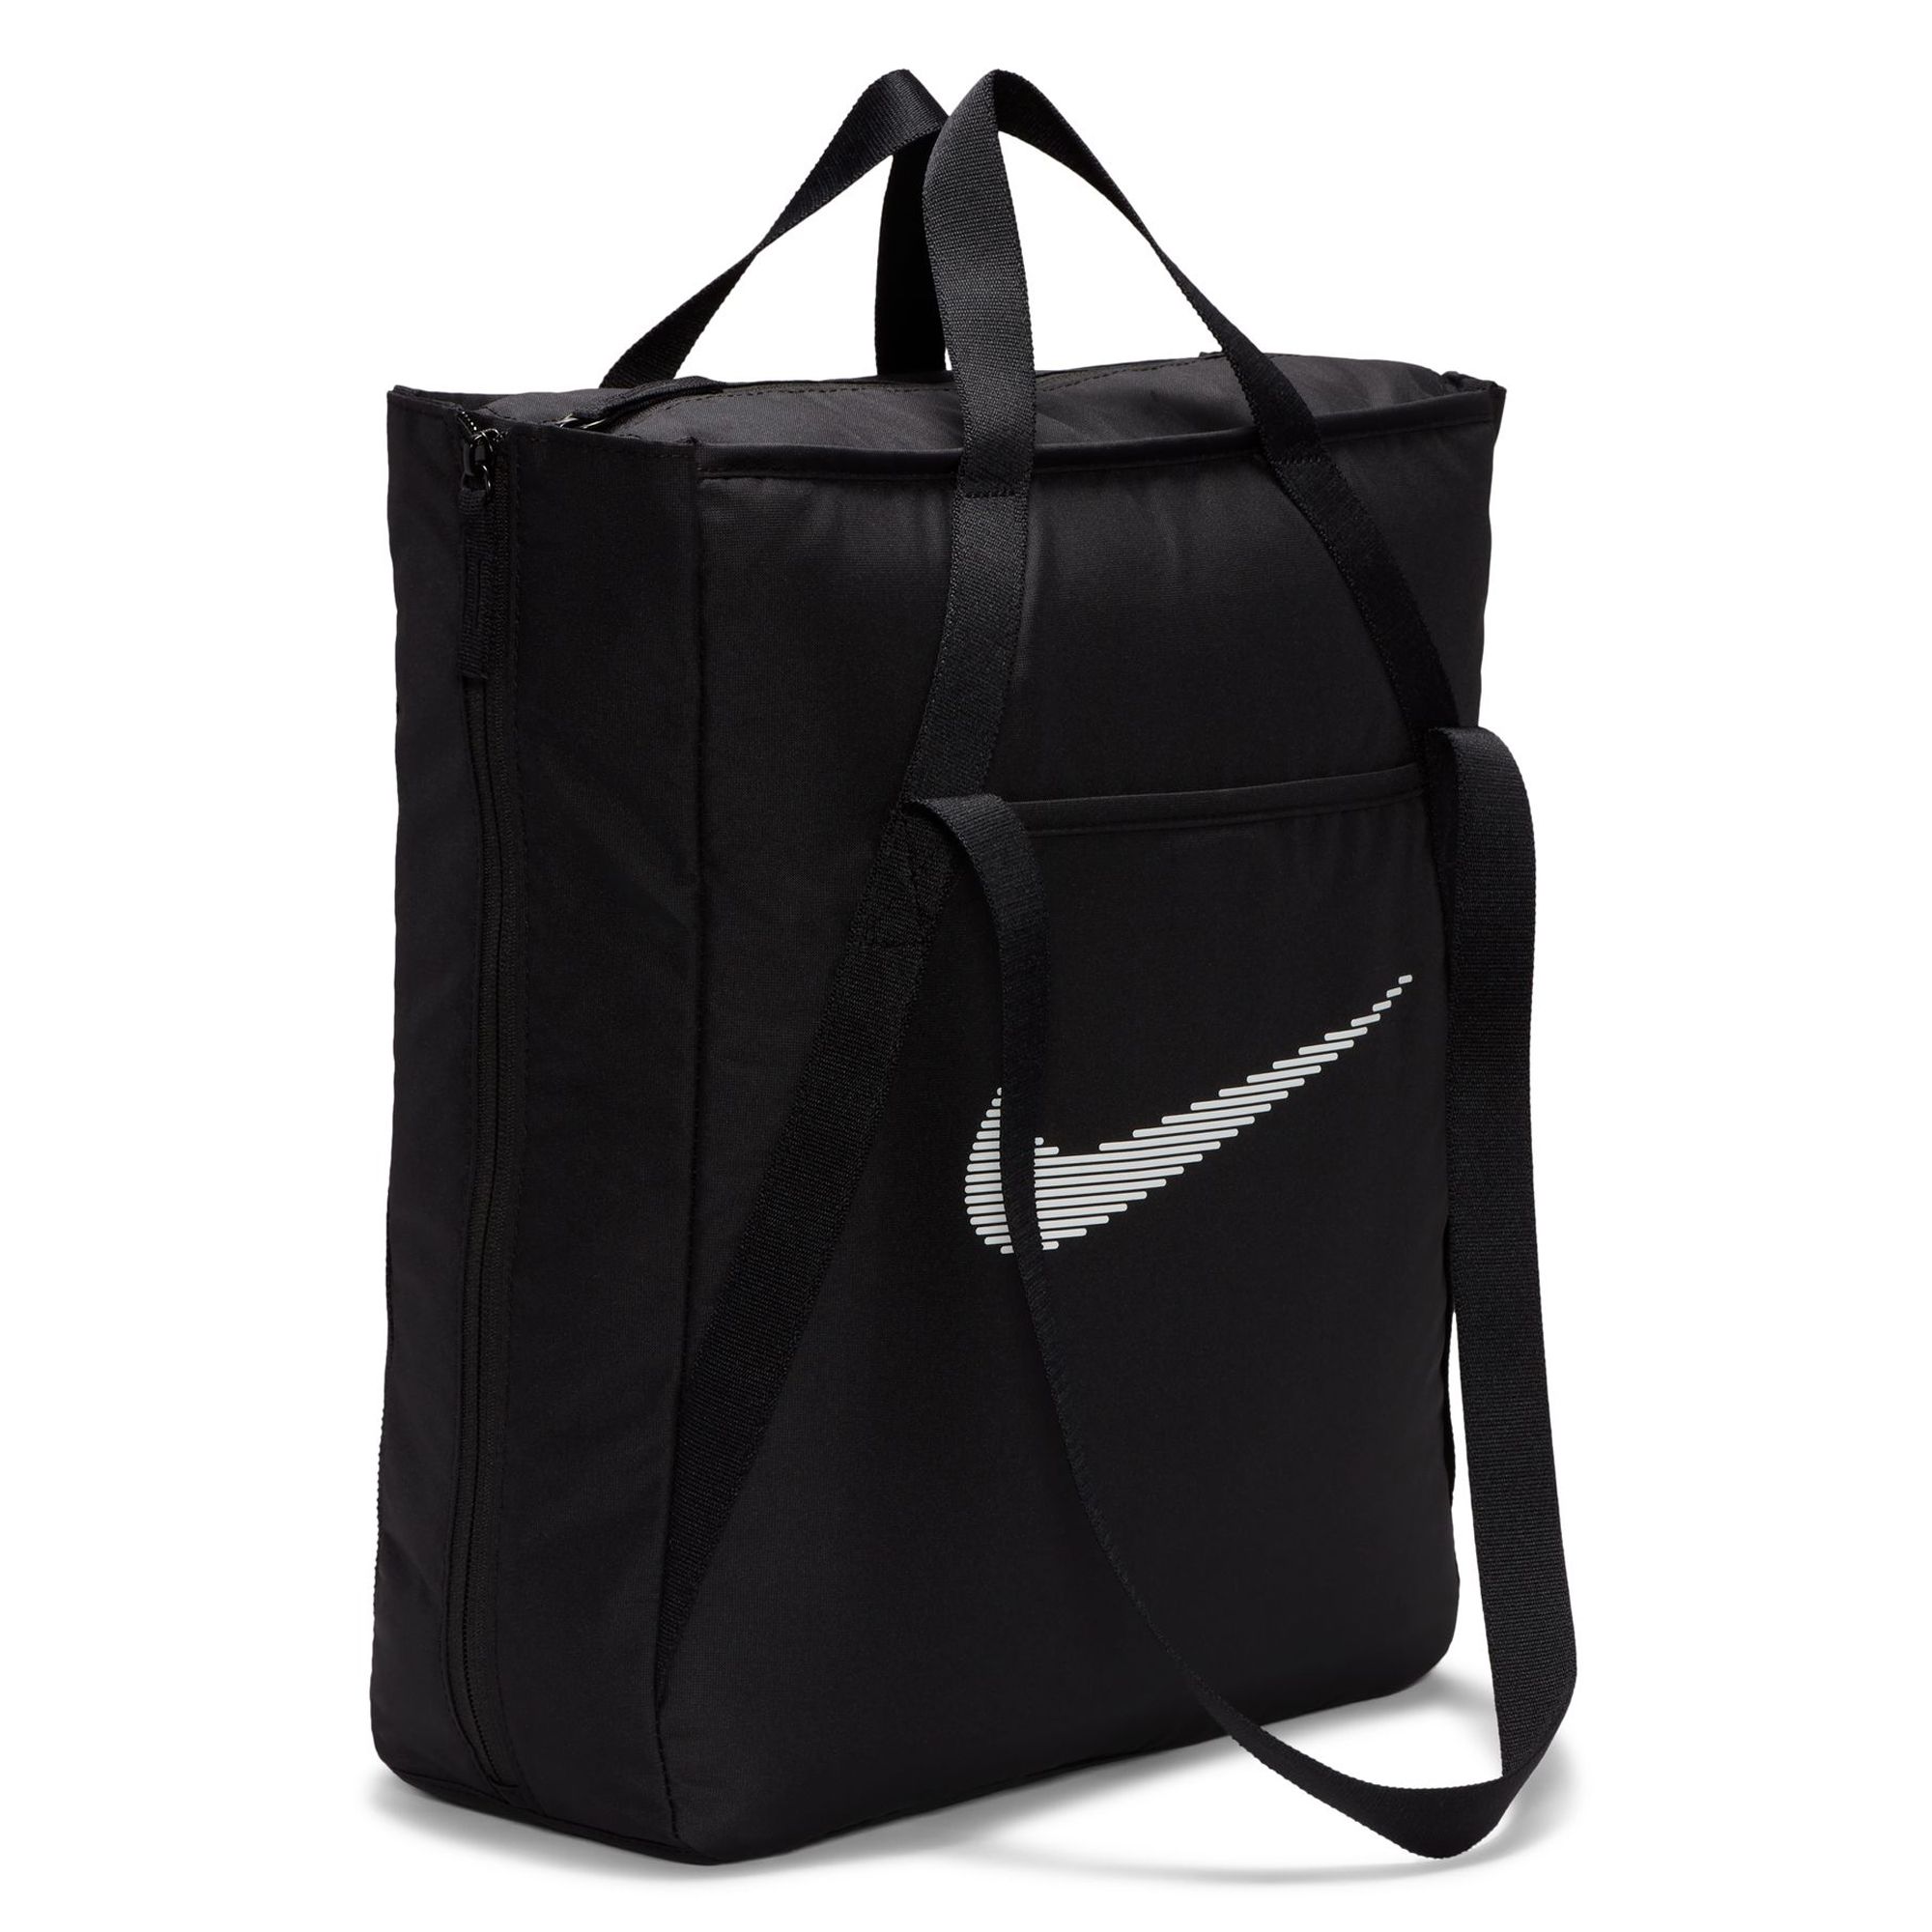 Nike Gym Tote Bag